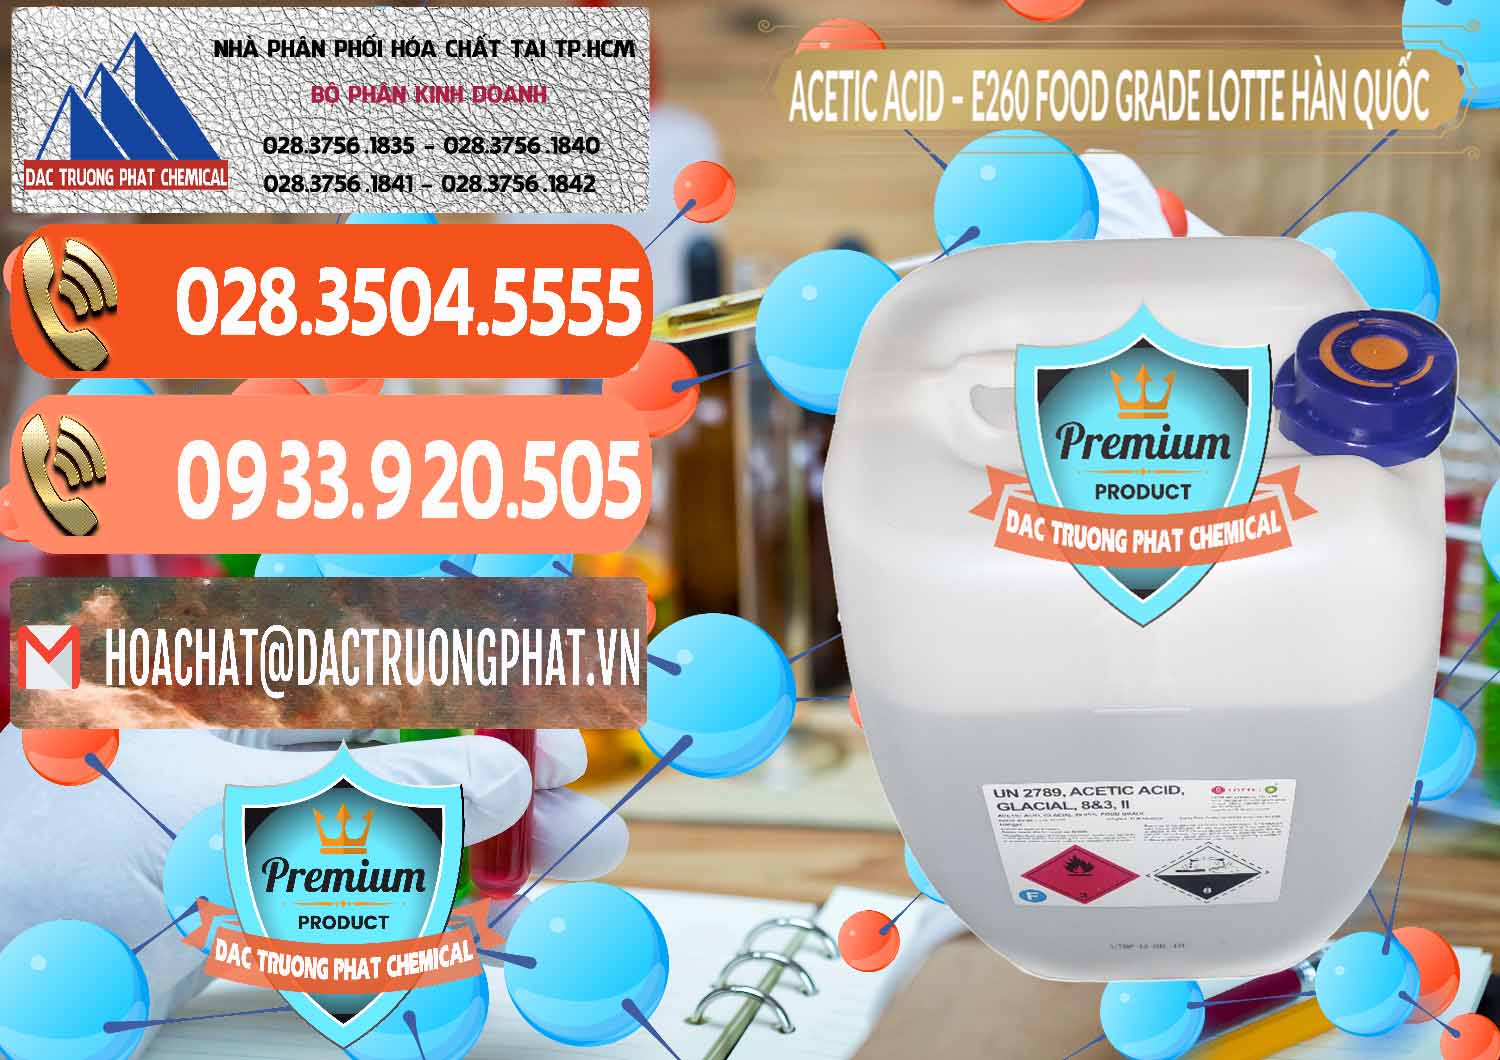 Bán Acetic Acid – Axit Acetic E260 Food Grade Hàn Quốc Lotte Korea - 0003 - Nơi cung cấp & bán hóa chất tại TP.HCM - hoachatmientay.com